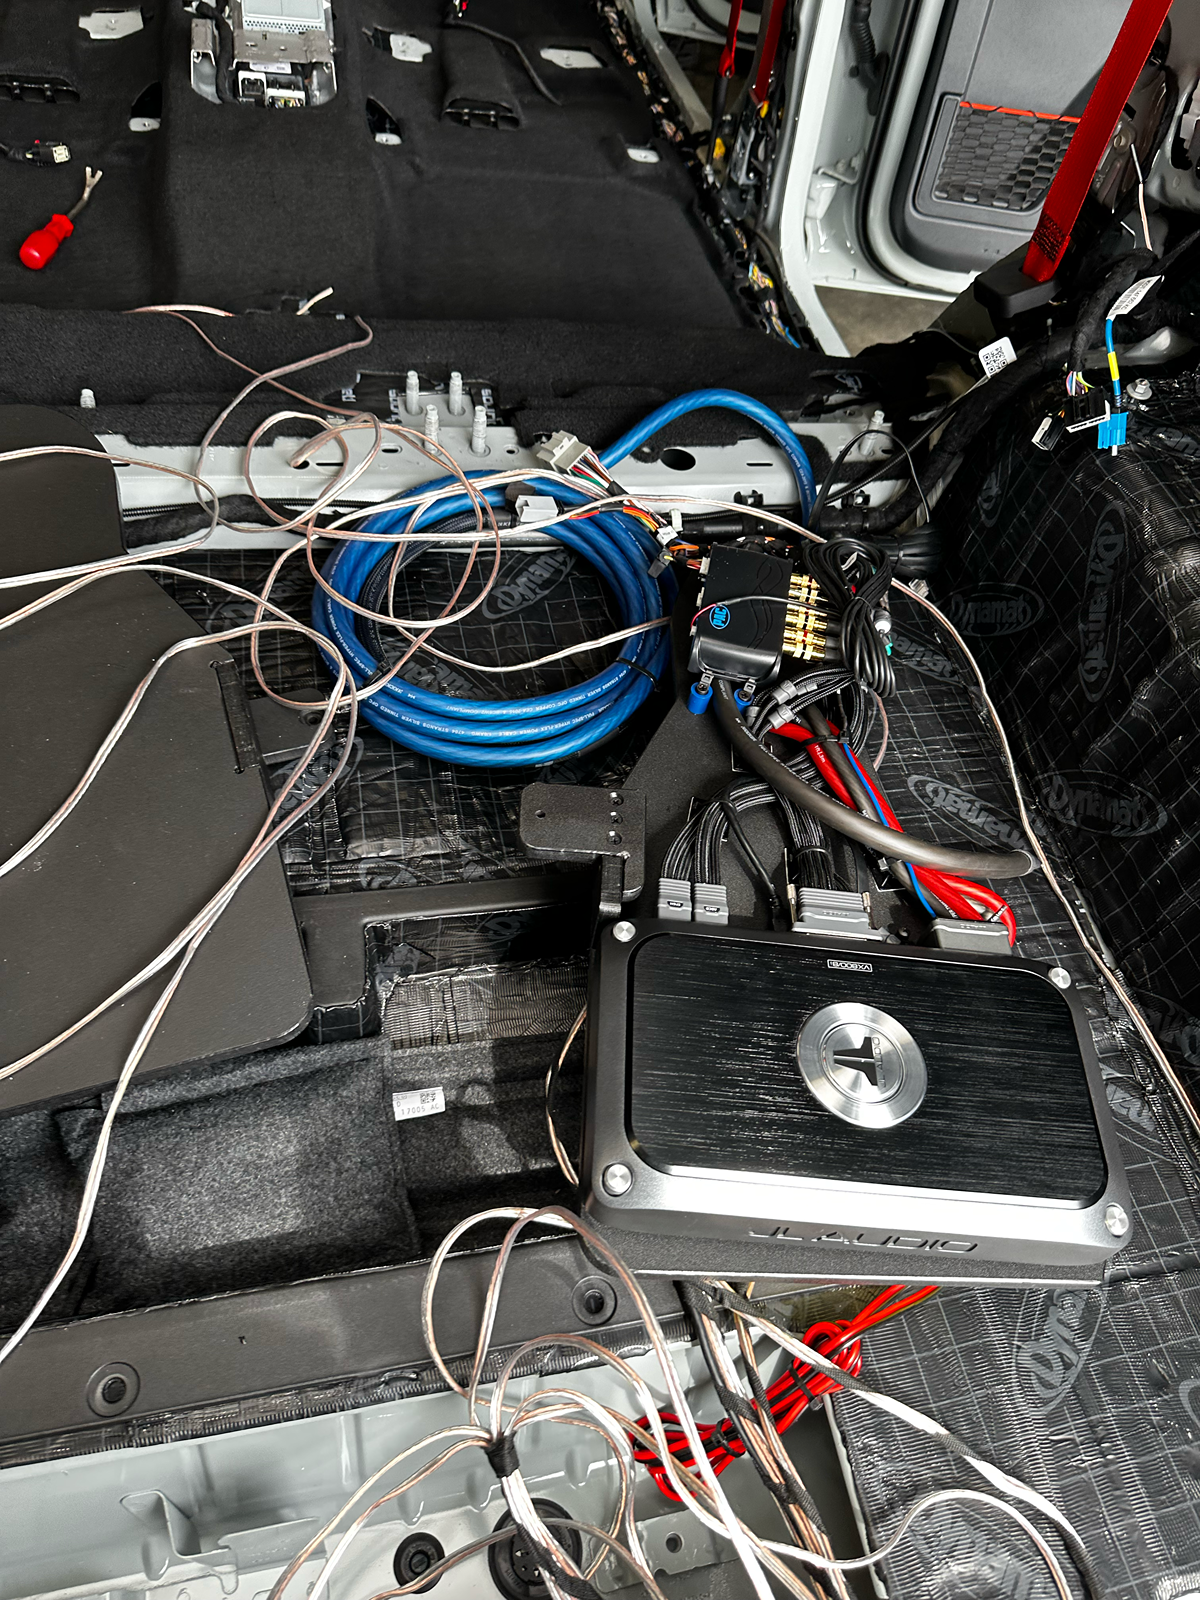 Ford Bronco Dream stereo system upgrade build in Bronco Raptor IMG_1811